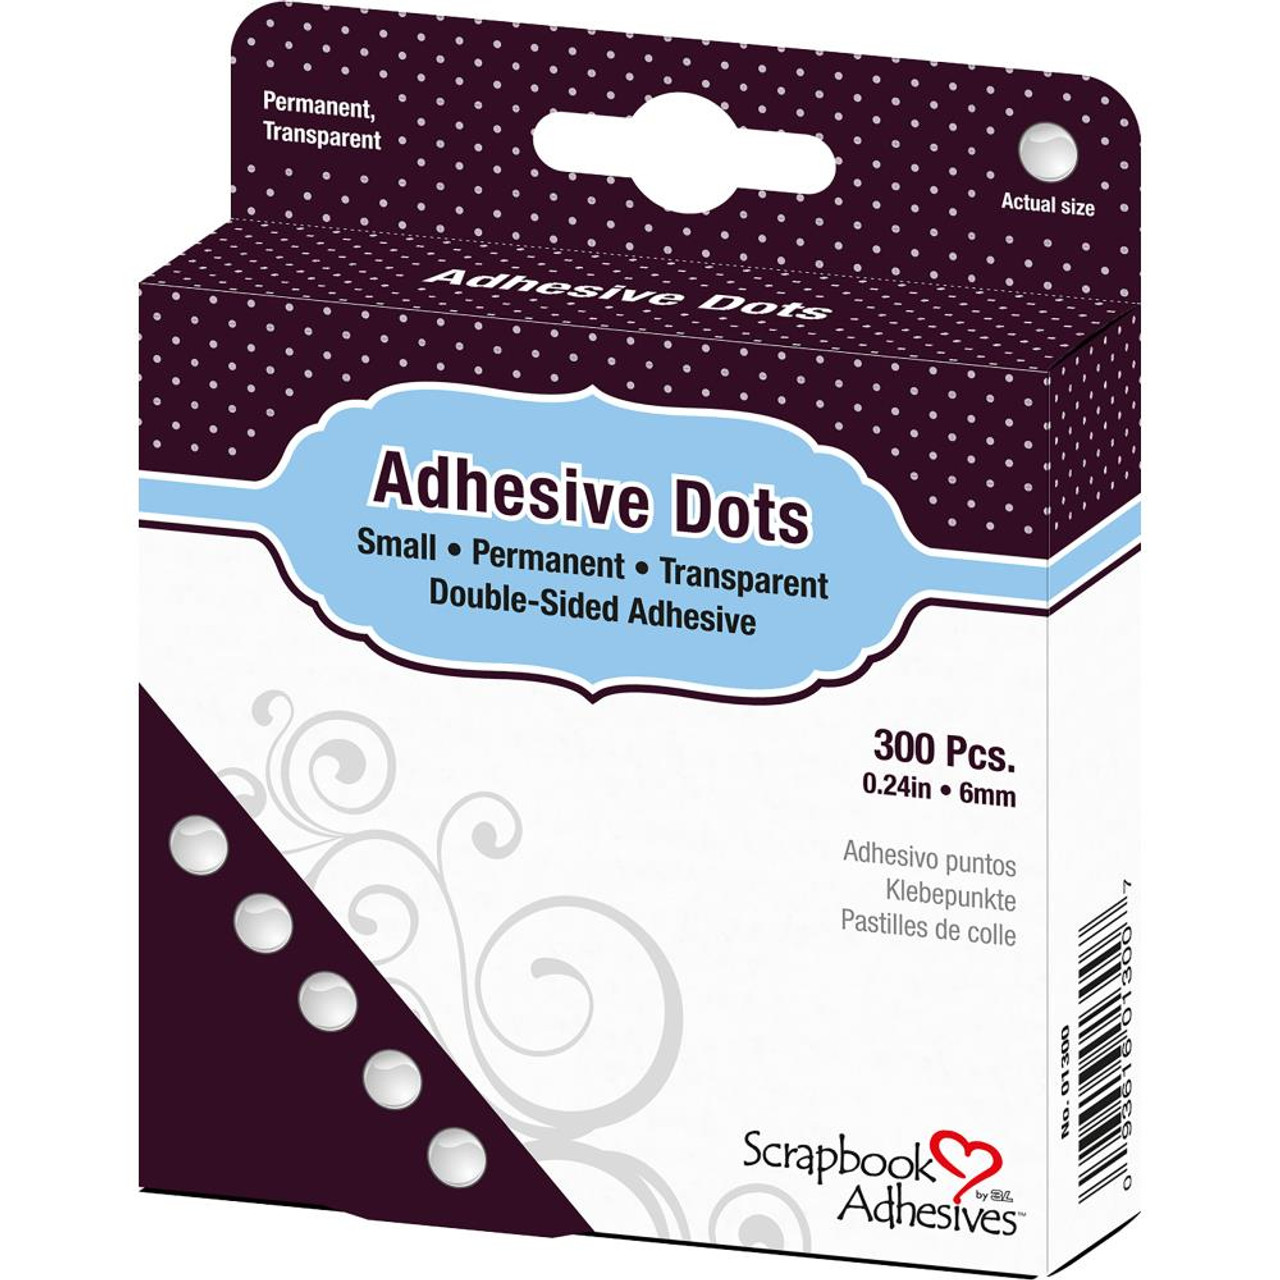 SCRAPBOOK ADHESIVES Permanent Adhesive Dots Roll: Small (300 pc.) -  Scrapbook Generation